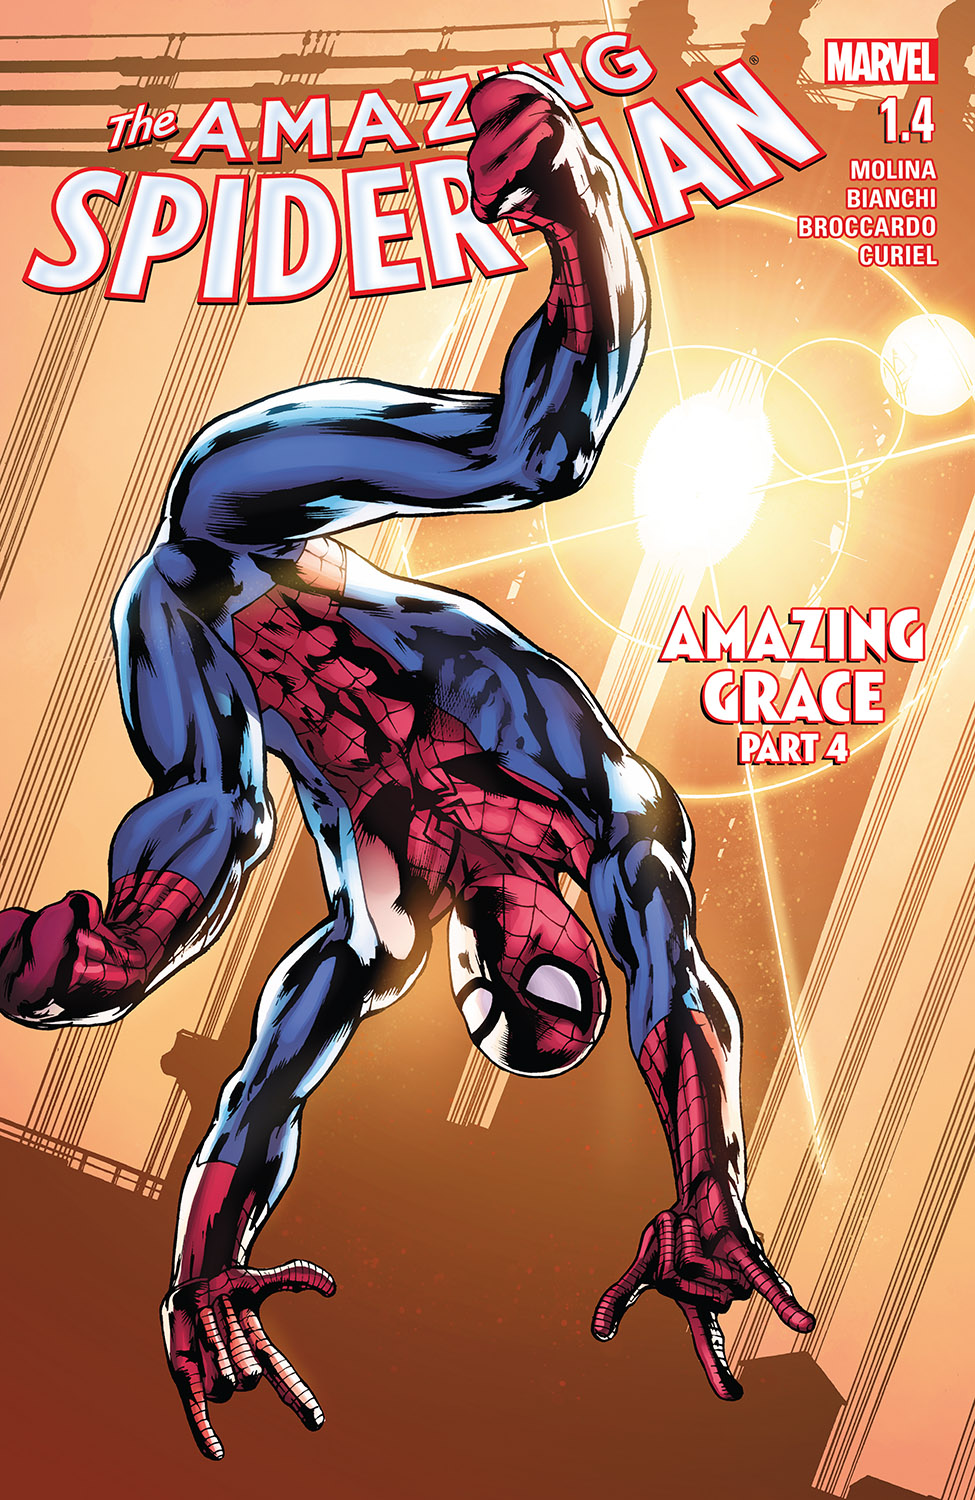 The Amazing Spider-Man (2017) #1.4